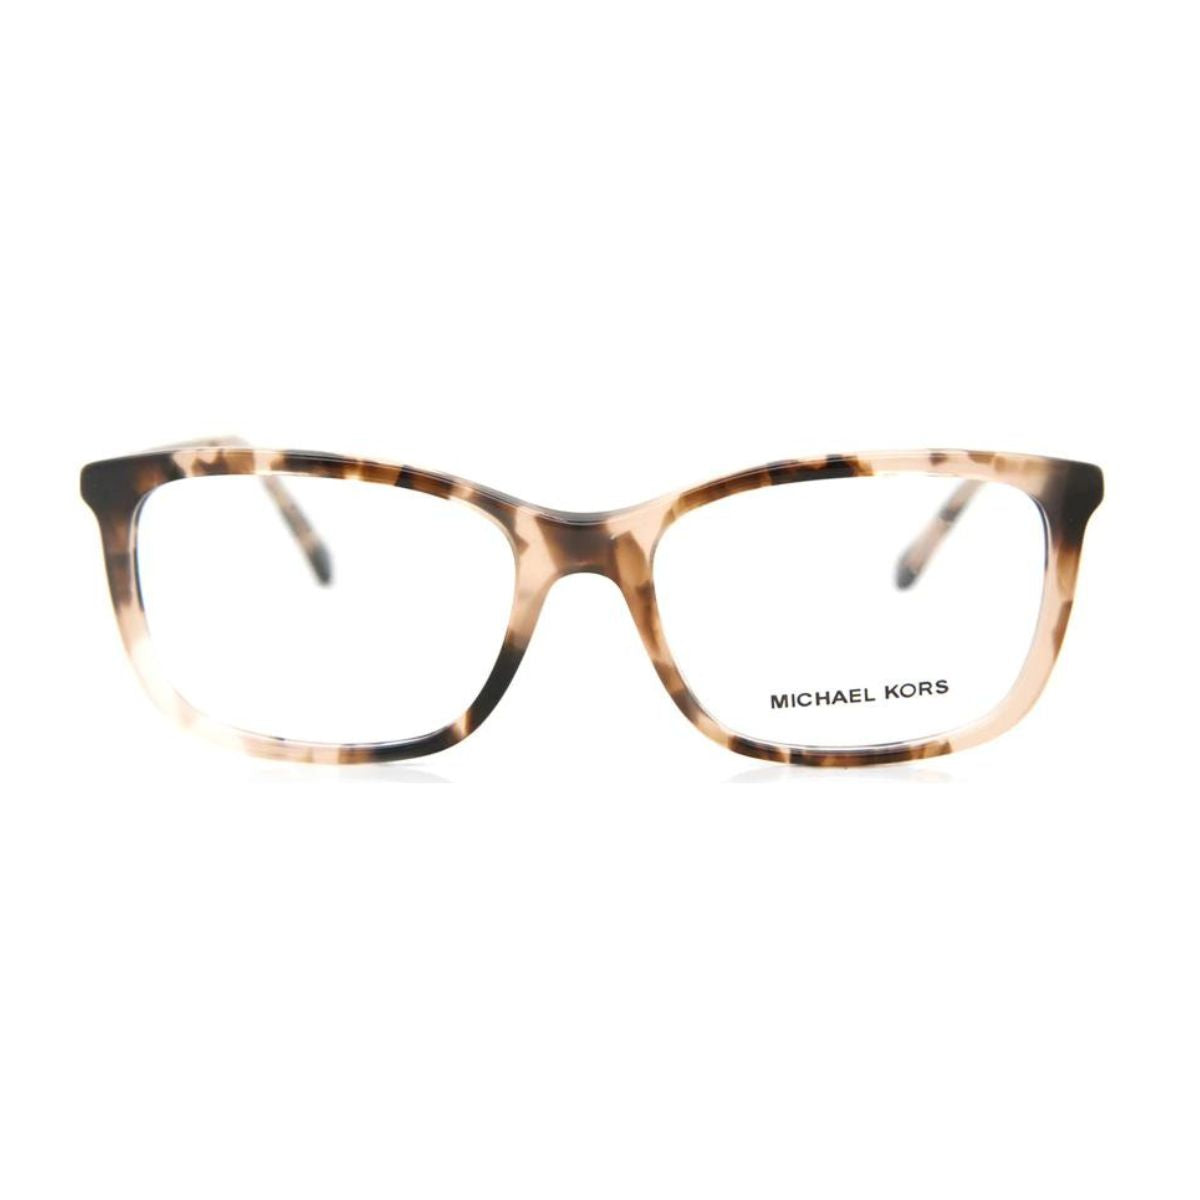 "best Michael Kors 4030 3162 cat eye eyewear frame for women's at optorium"